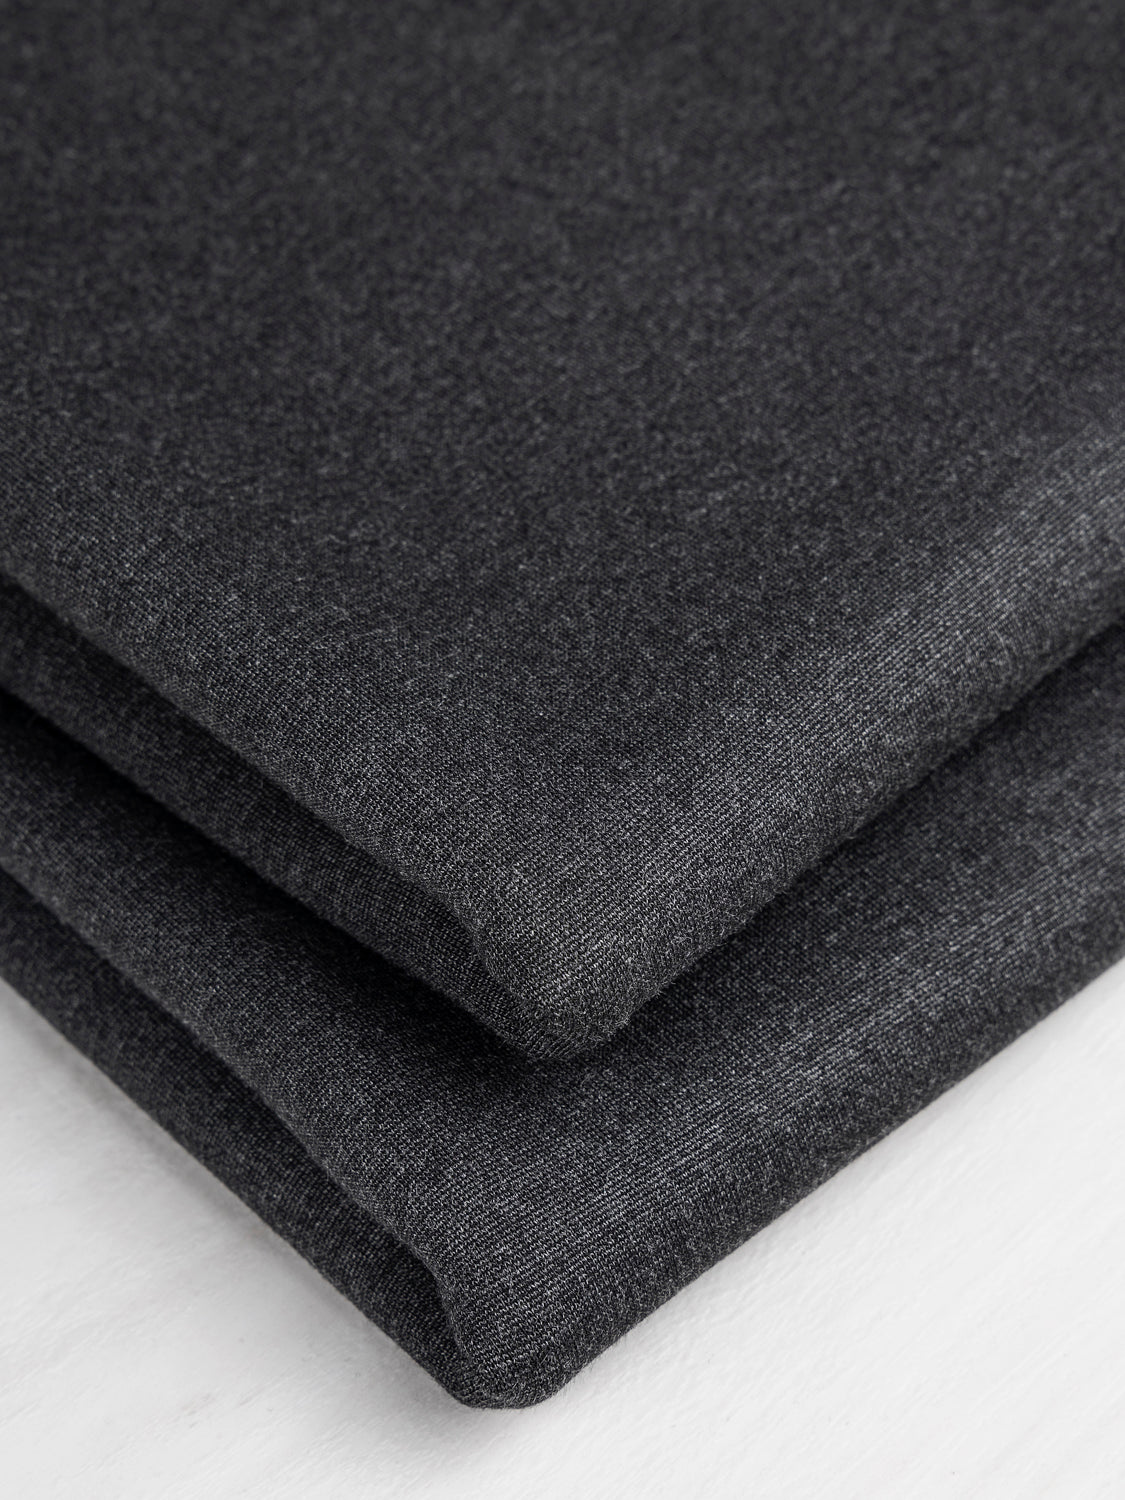 Felt Fabric - Black, Sewing & Knitting Supplies